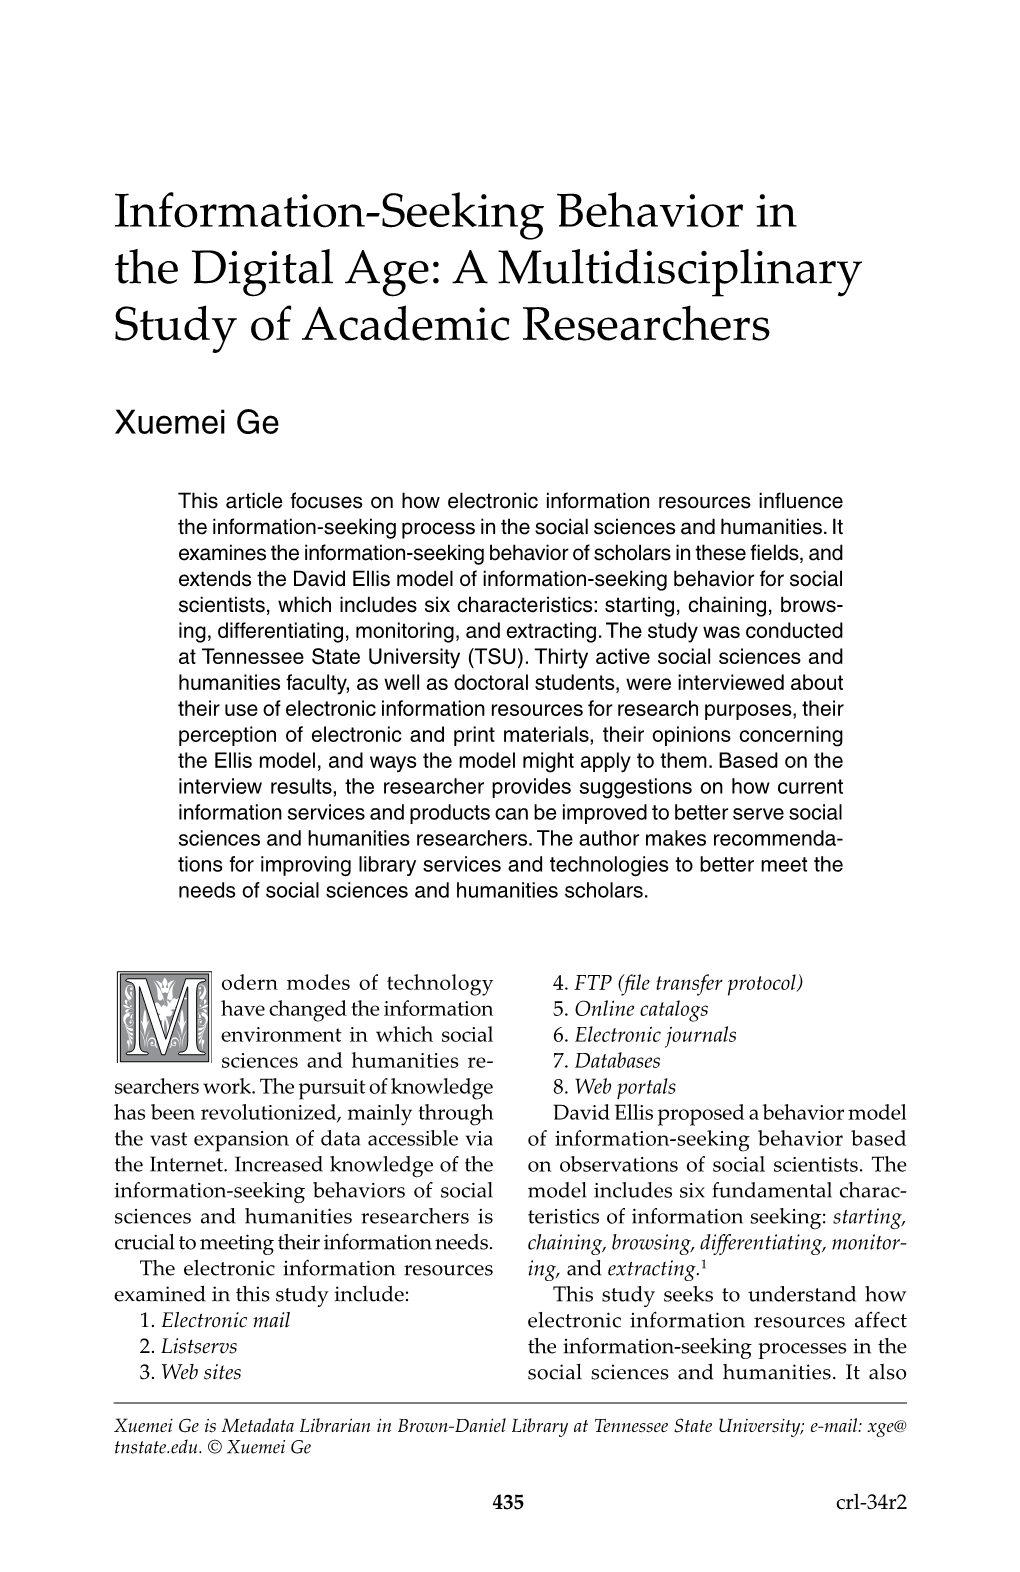 Information-Seeking Behavior in the Digital Age: a Multidisciplinary Study of Academic Researchers